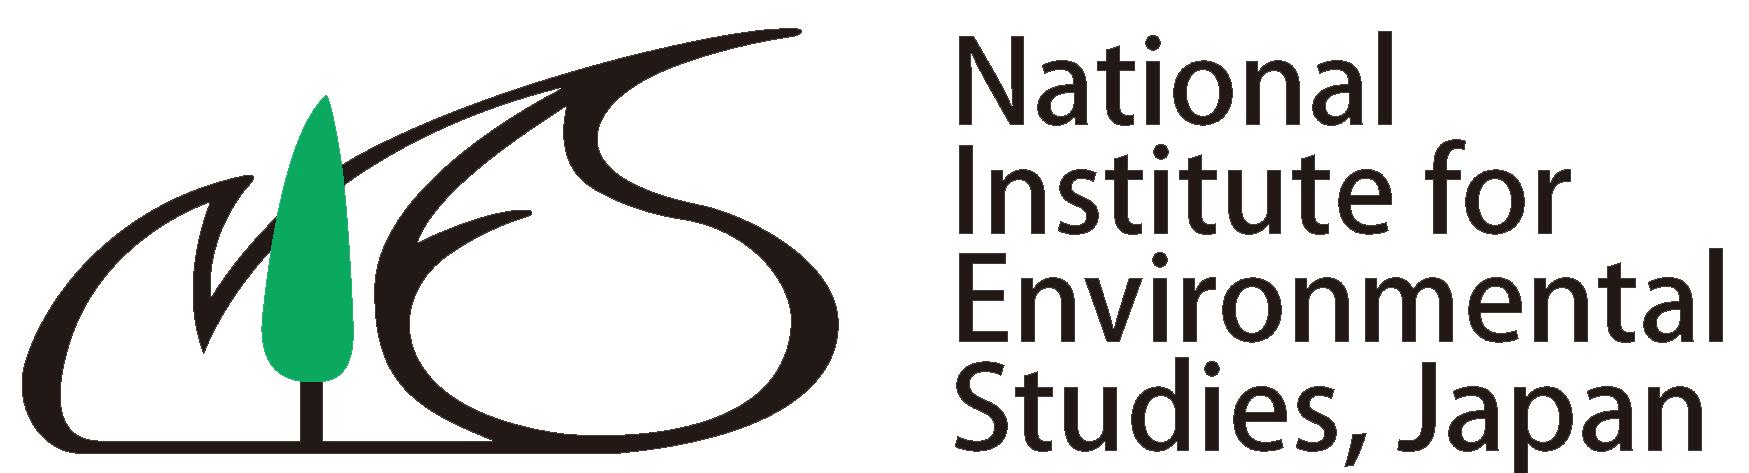 National Institure for Environmental Studies, Japan